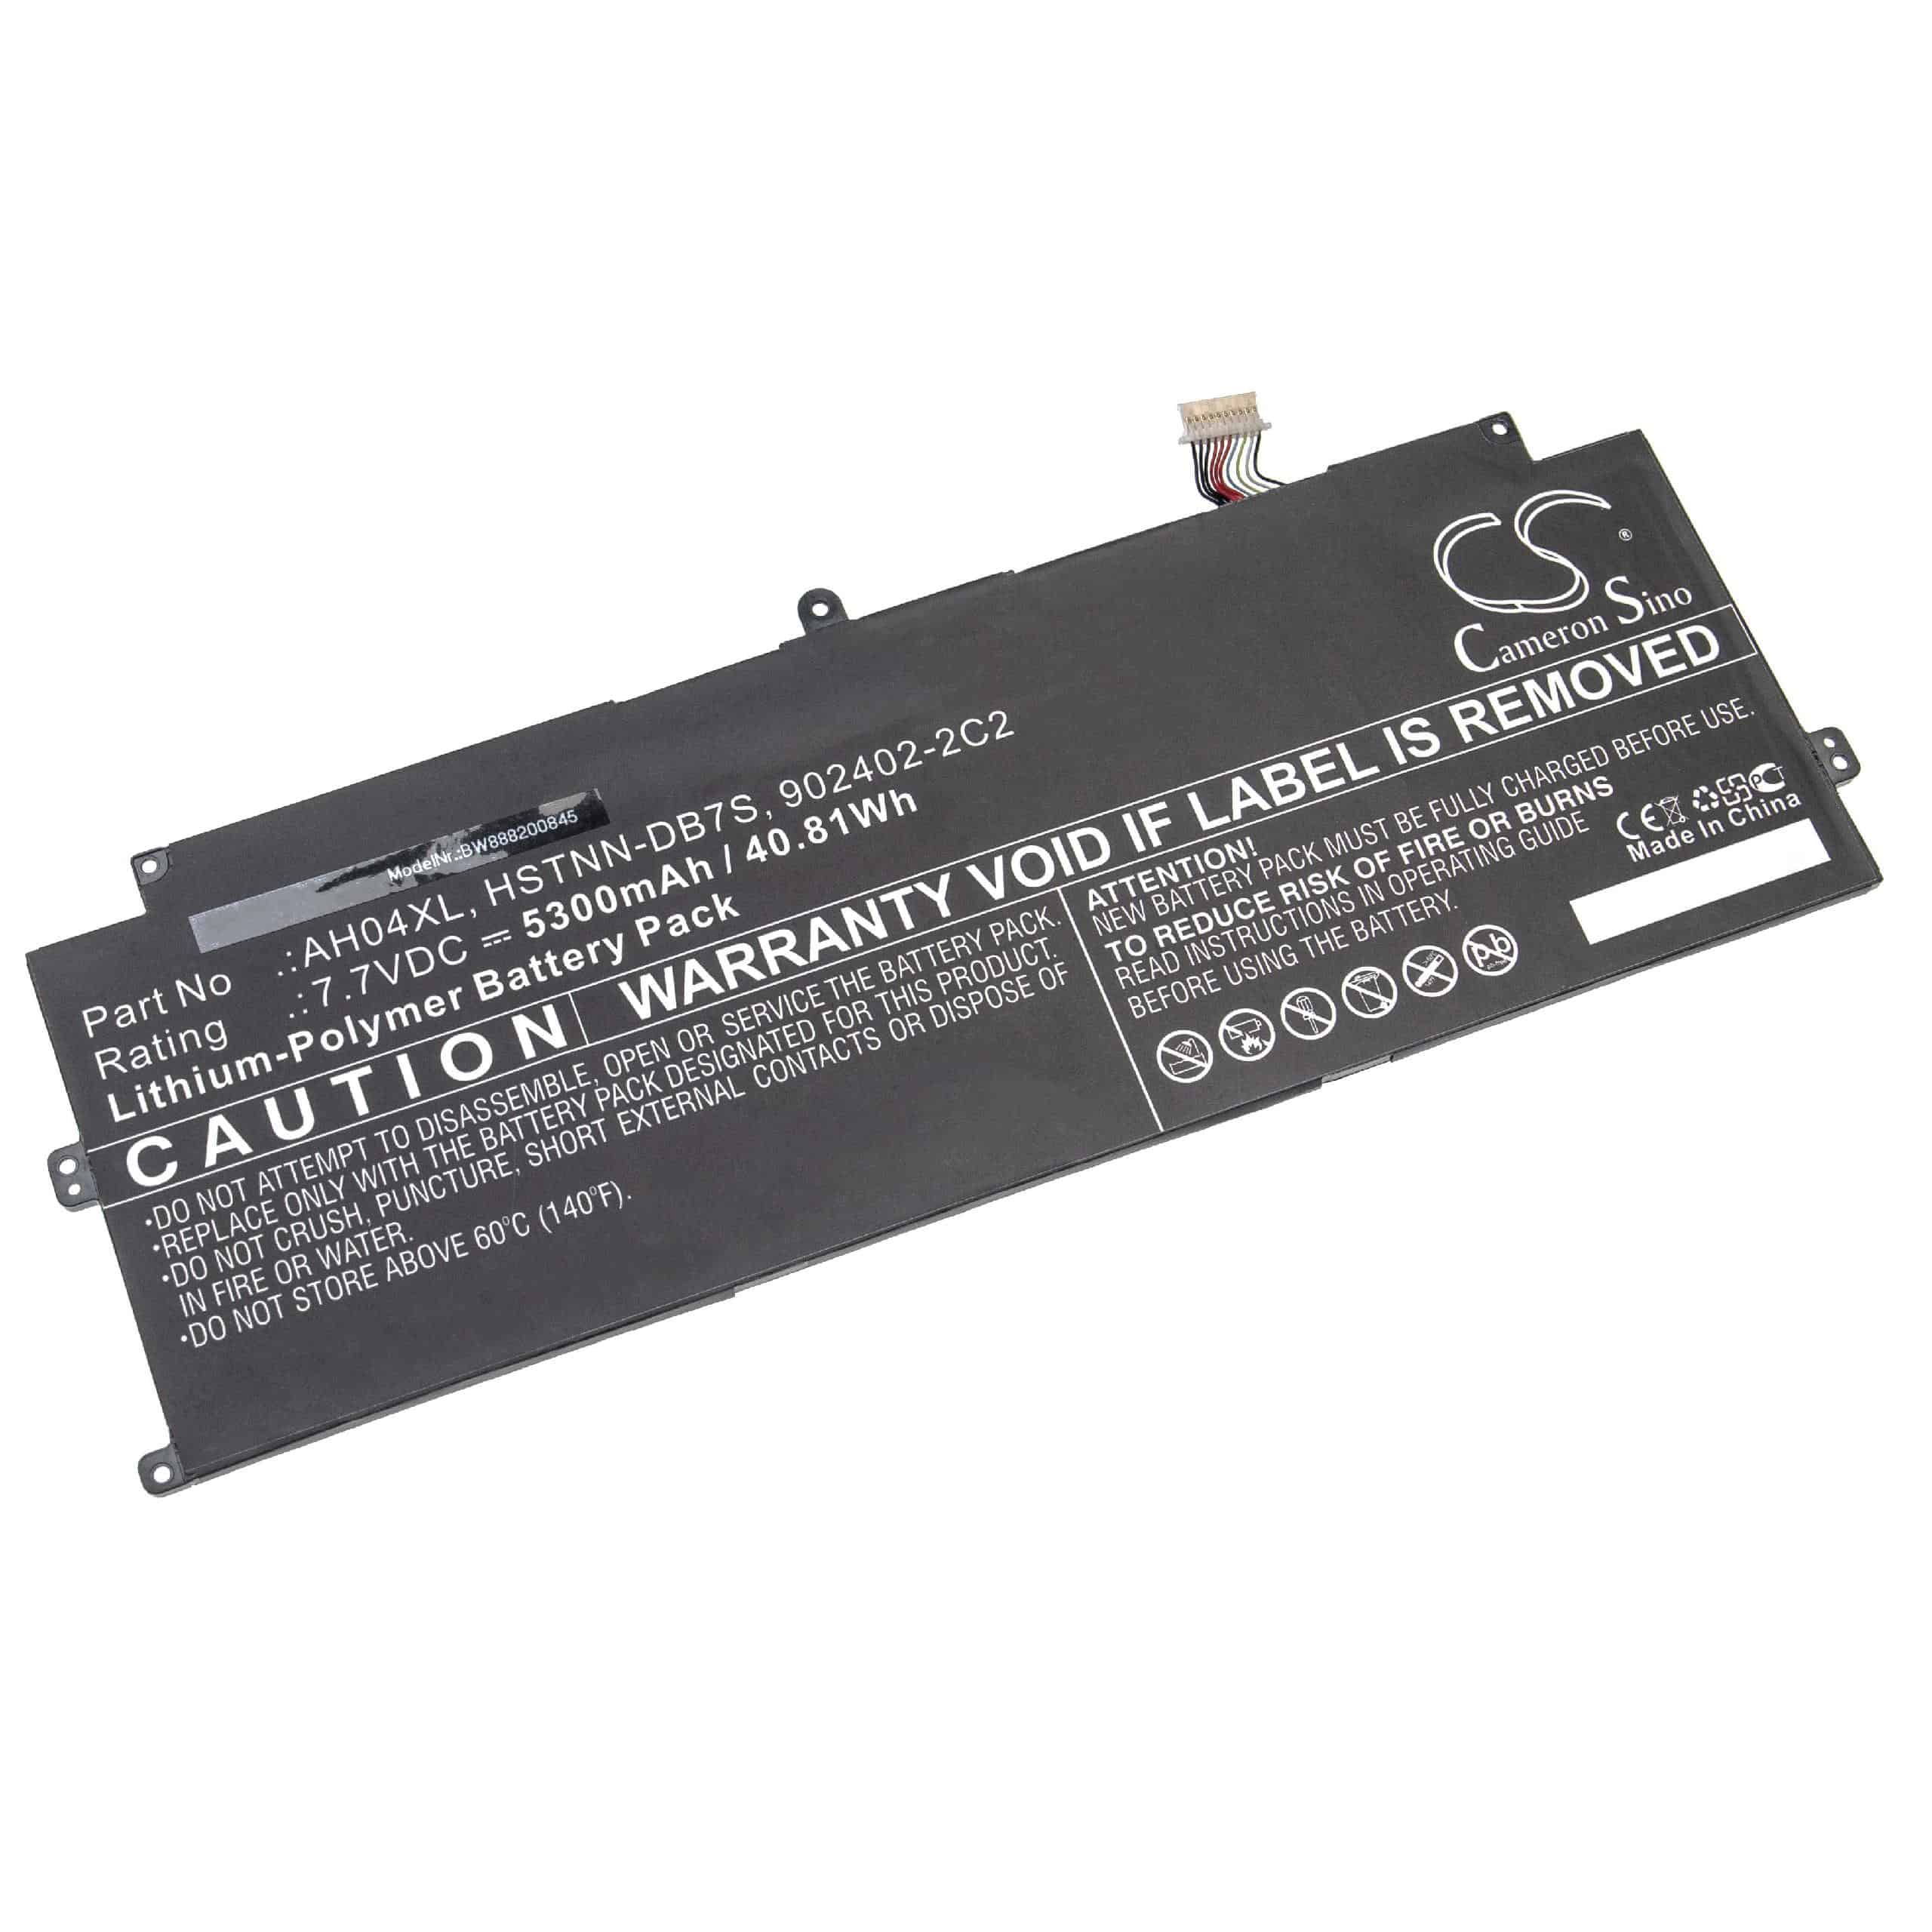 Notebook Battery Replacement for HP 902402-2C2, AH04XL, 902500-855 - 5300mAh 7.7V Li-polymer, black